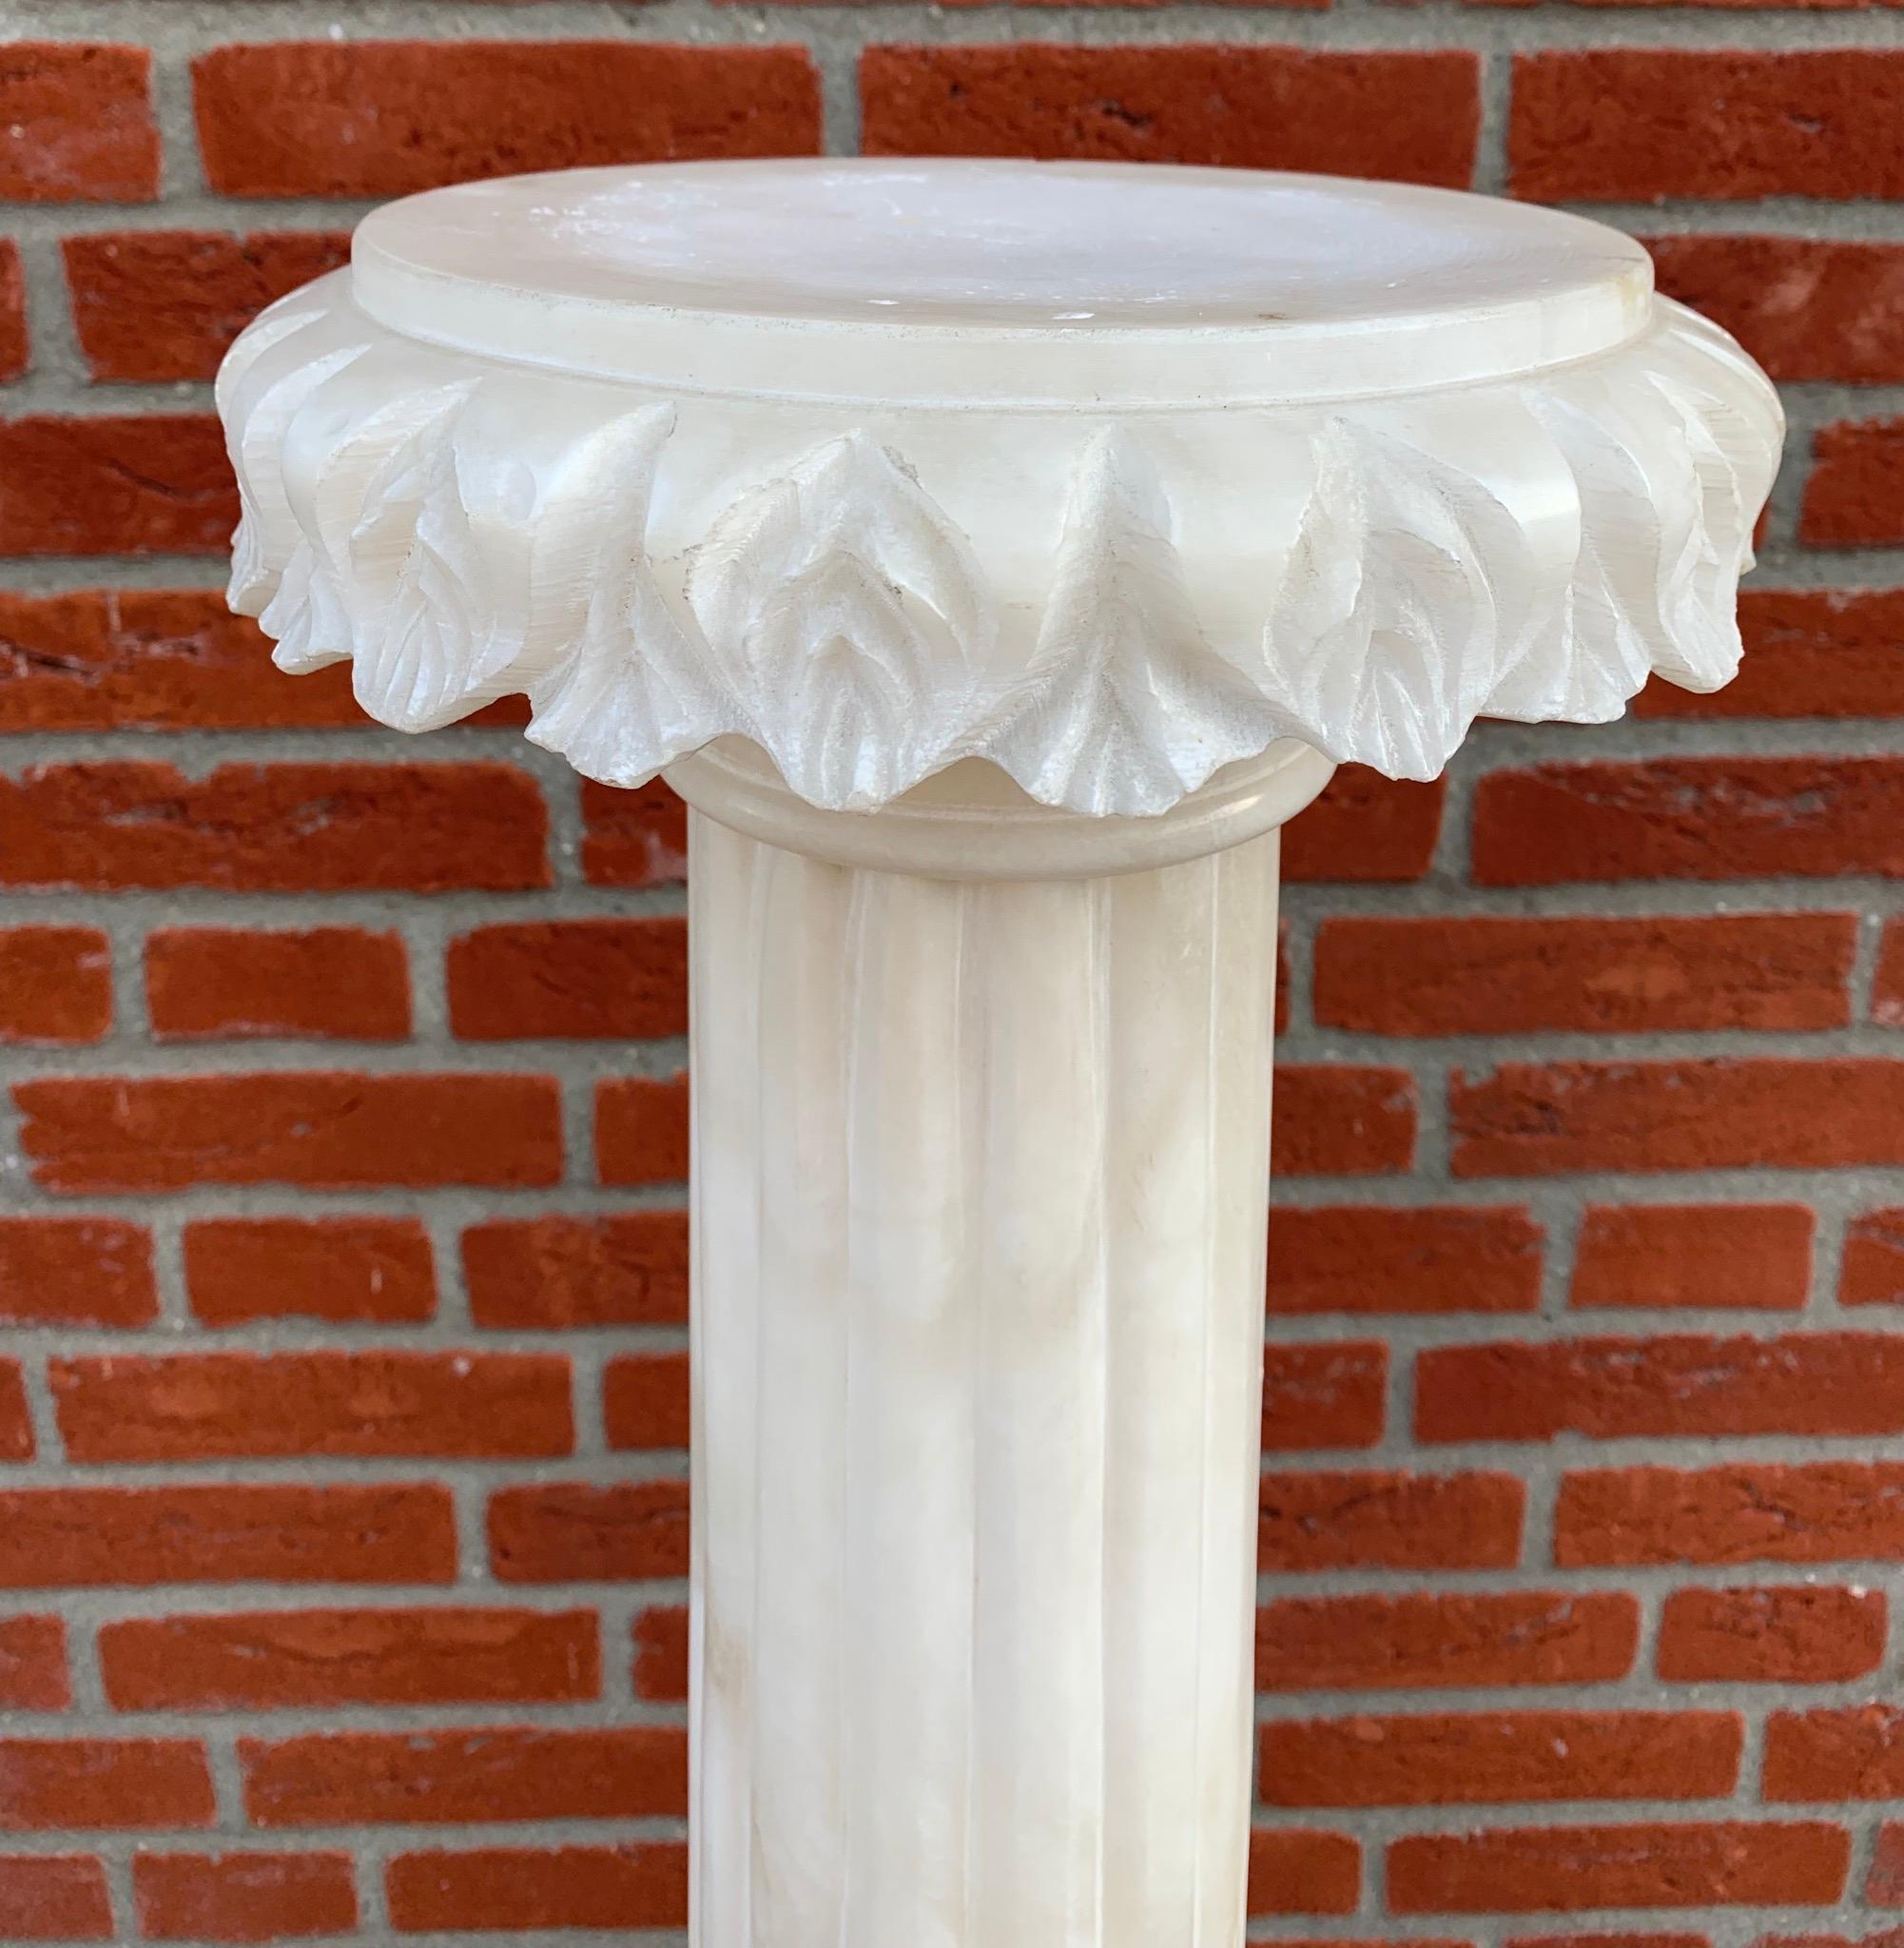 Polished Wonderful Midcentury Made Art Deco Style Carved Alabaster Column Pedestal Stand For Sale